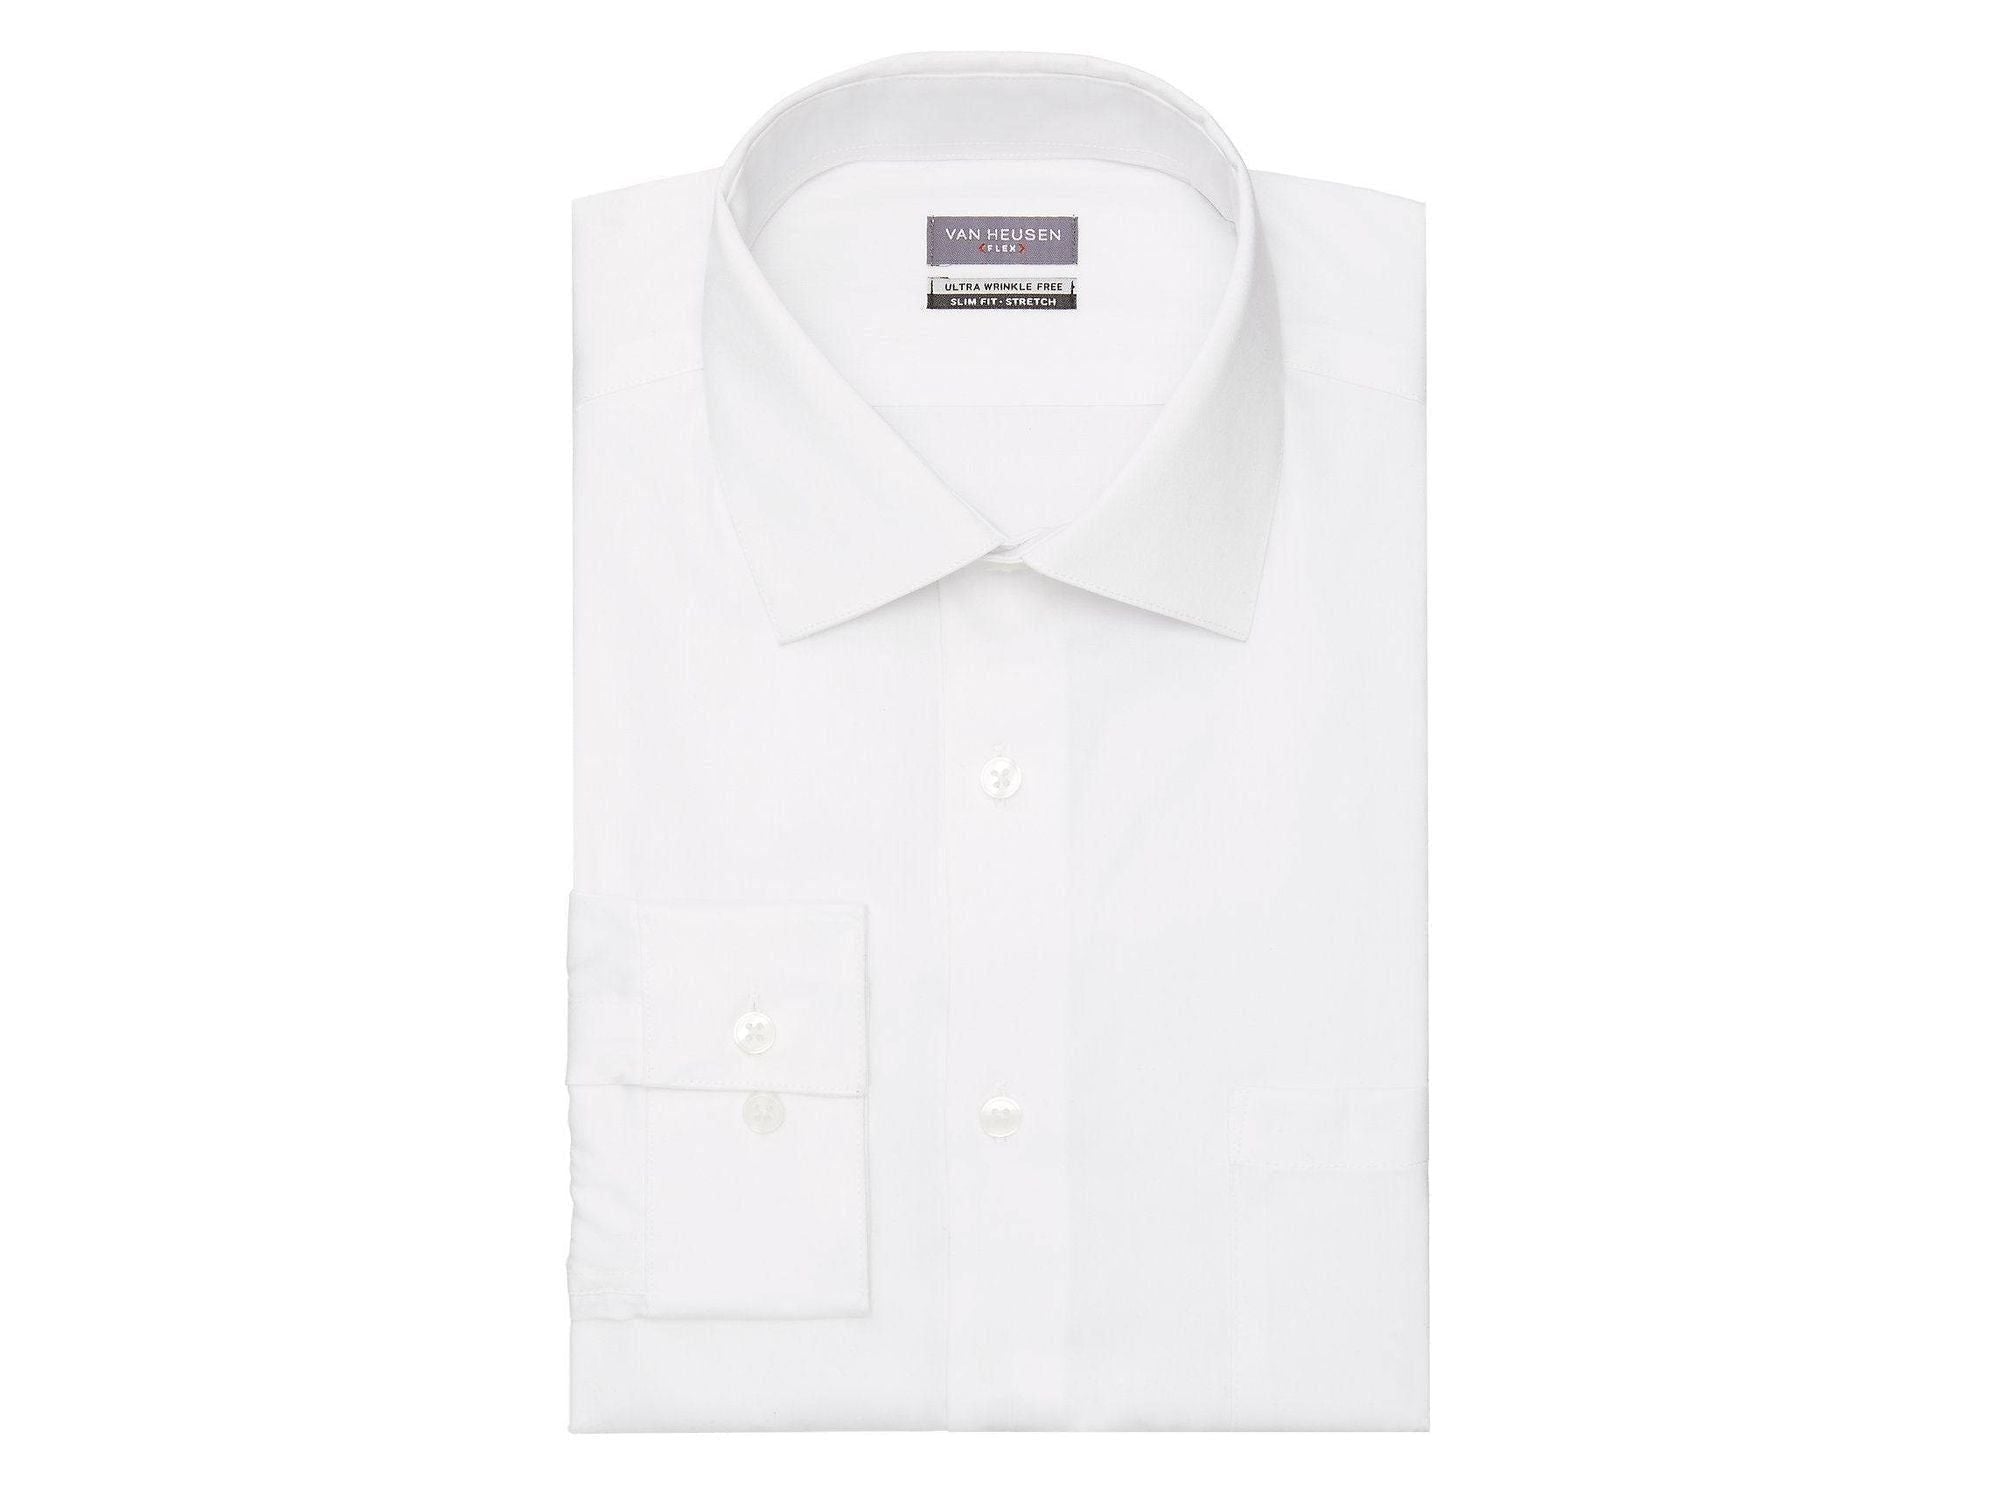 Van Heusen Slim Fit Ultra Wrinkle Free Stretch FLEX Solid Dress Shirt in White - Rainwater's Men's Clothing and Tuxedo Rental